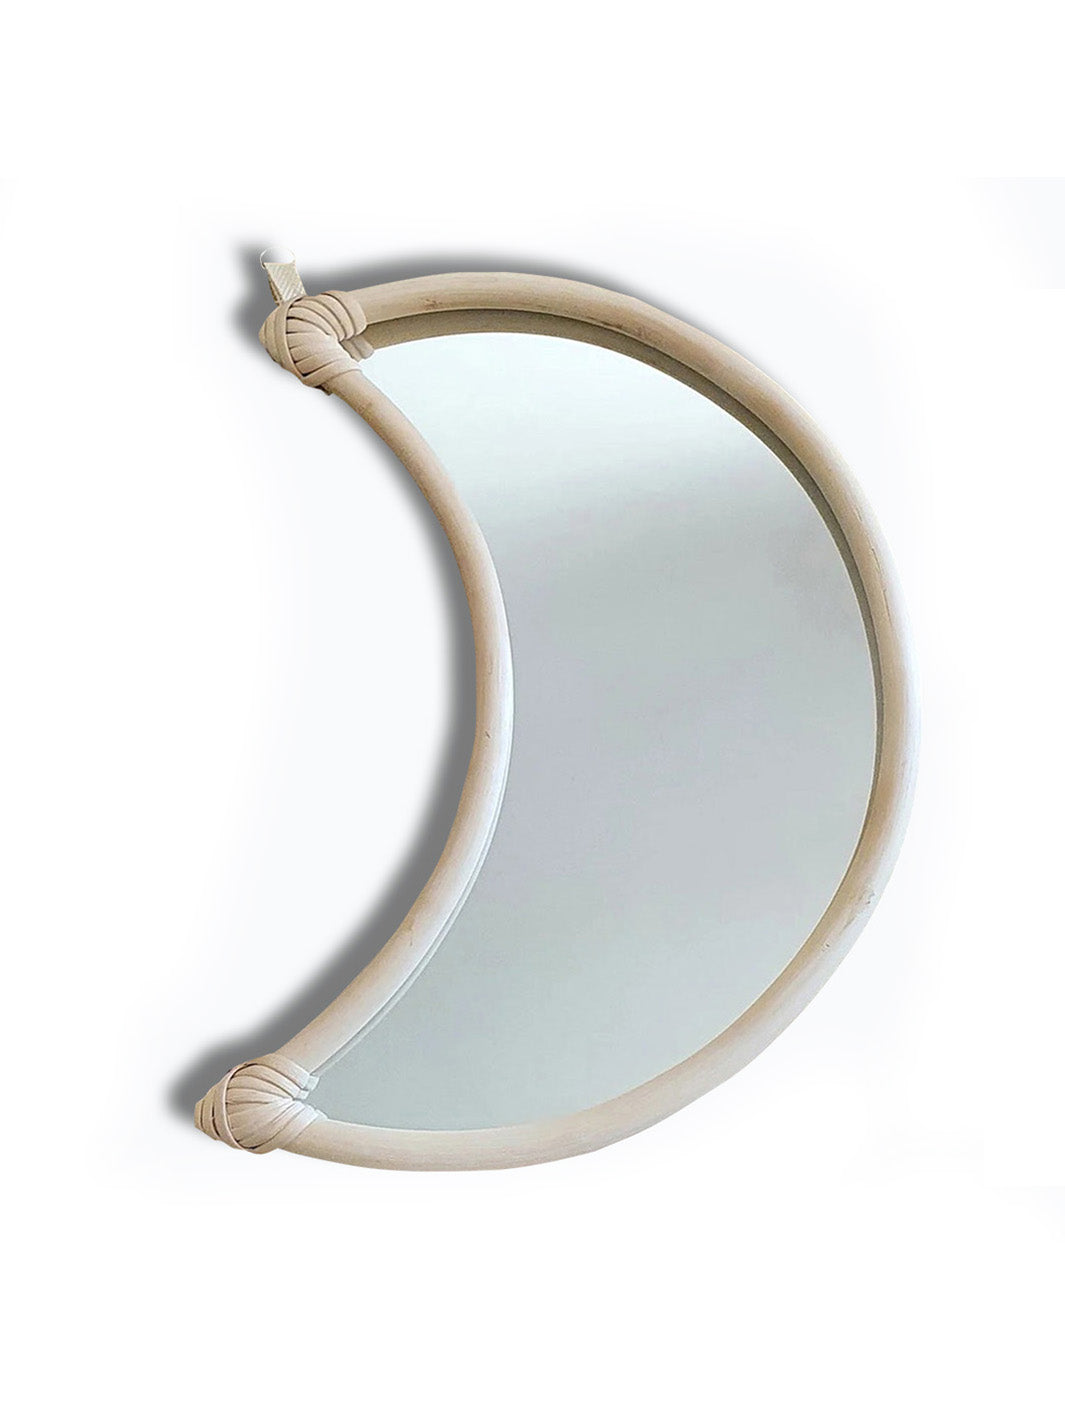 Handcrafted Moon-Shaped Rattan Wall Mirror Libitii Mirrors LIB-0118